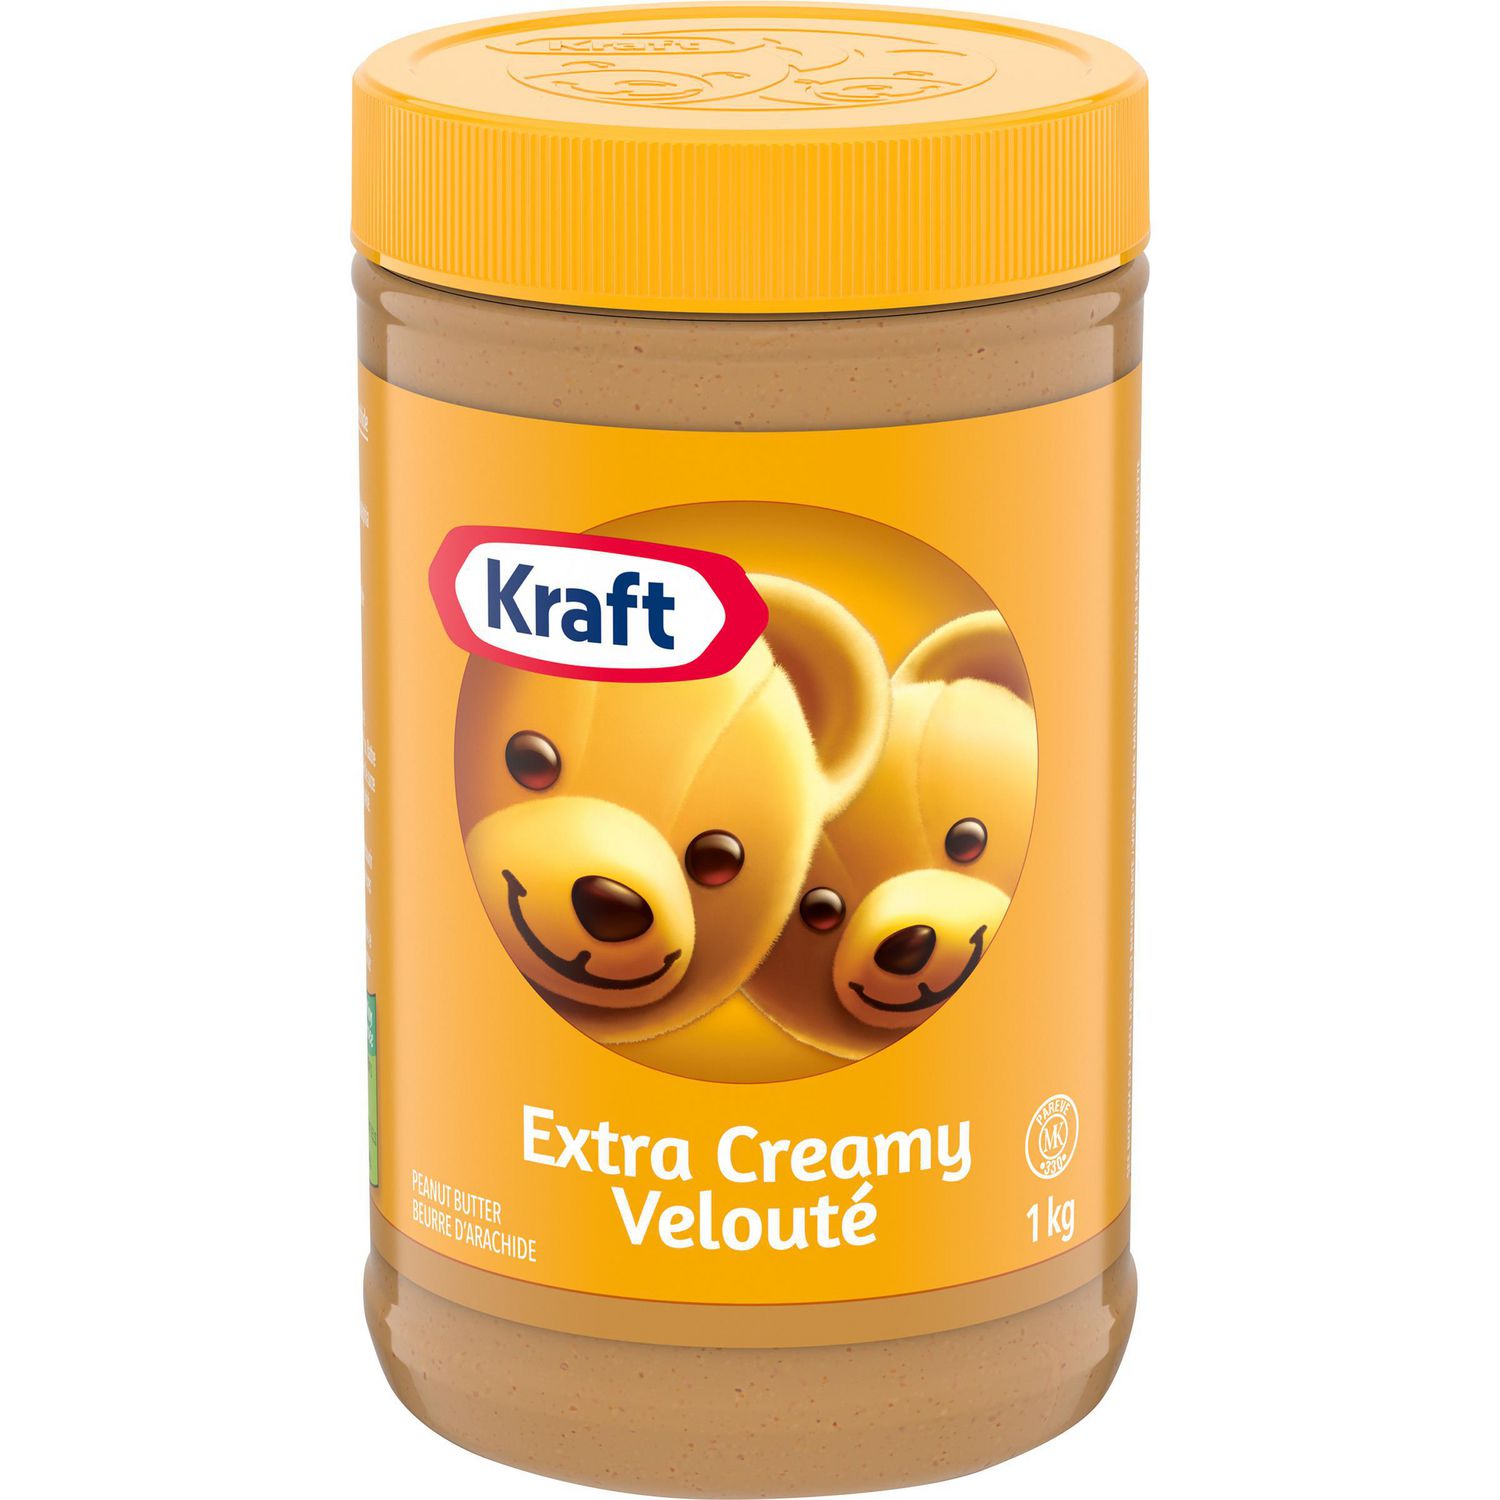 Kraft Extra Creamy Peanut Butter Walmart Canada 